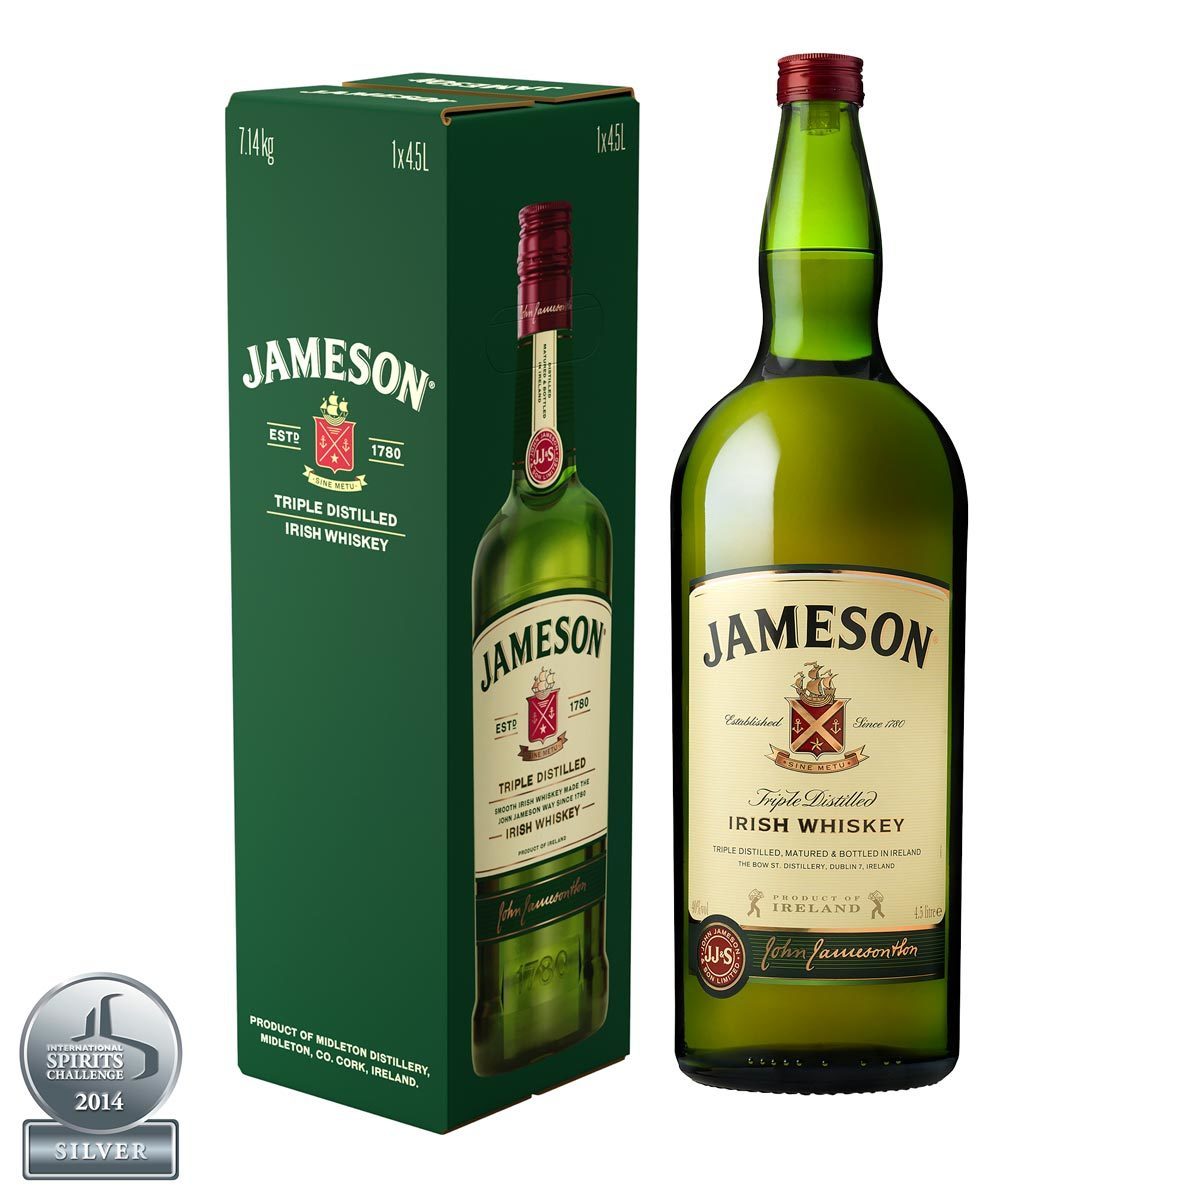 Jameson Triple Distilled Irish Whiskey, 4.5L